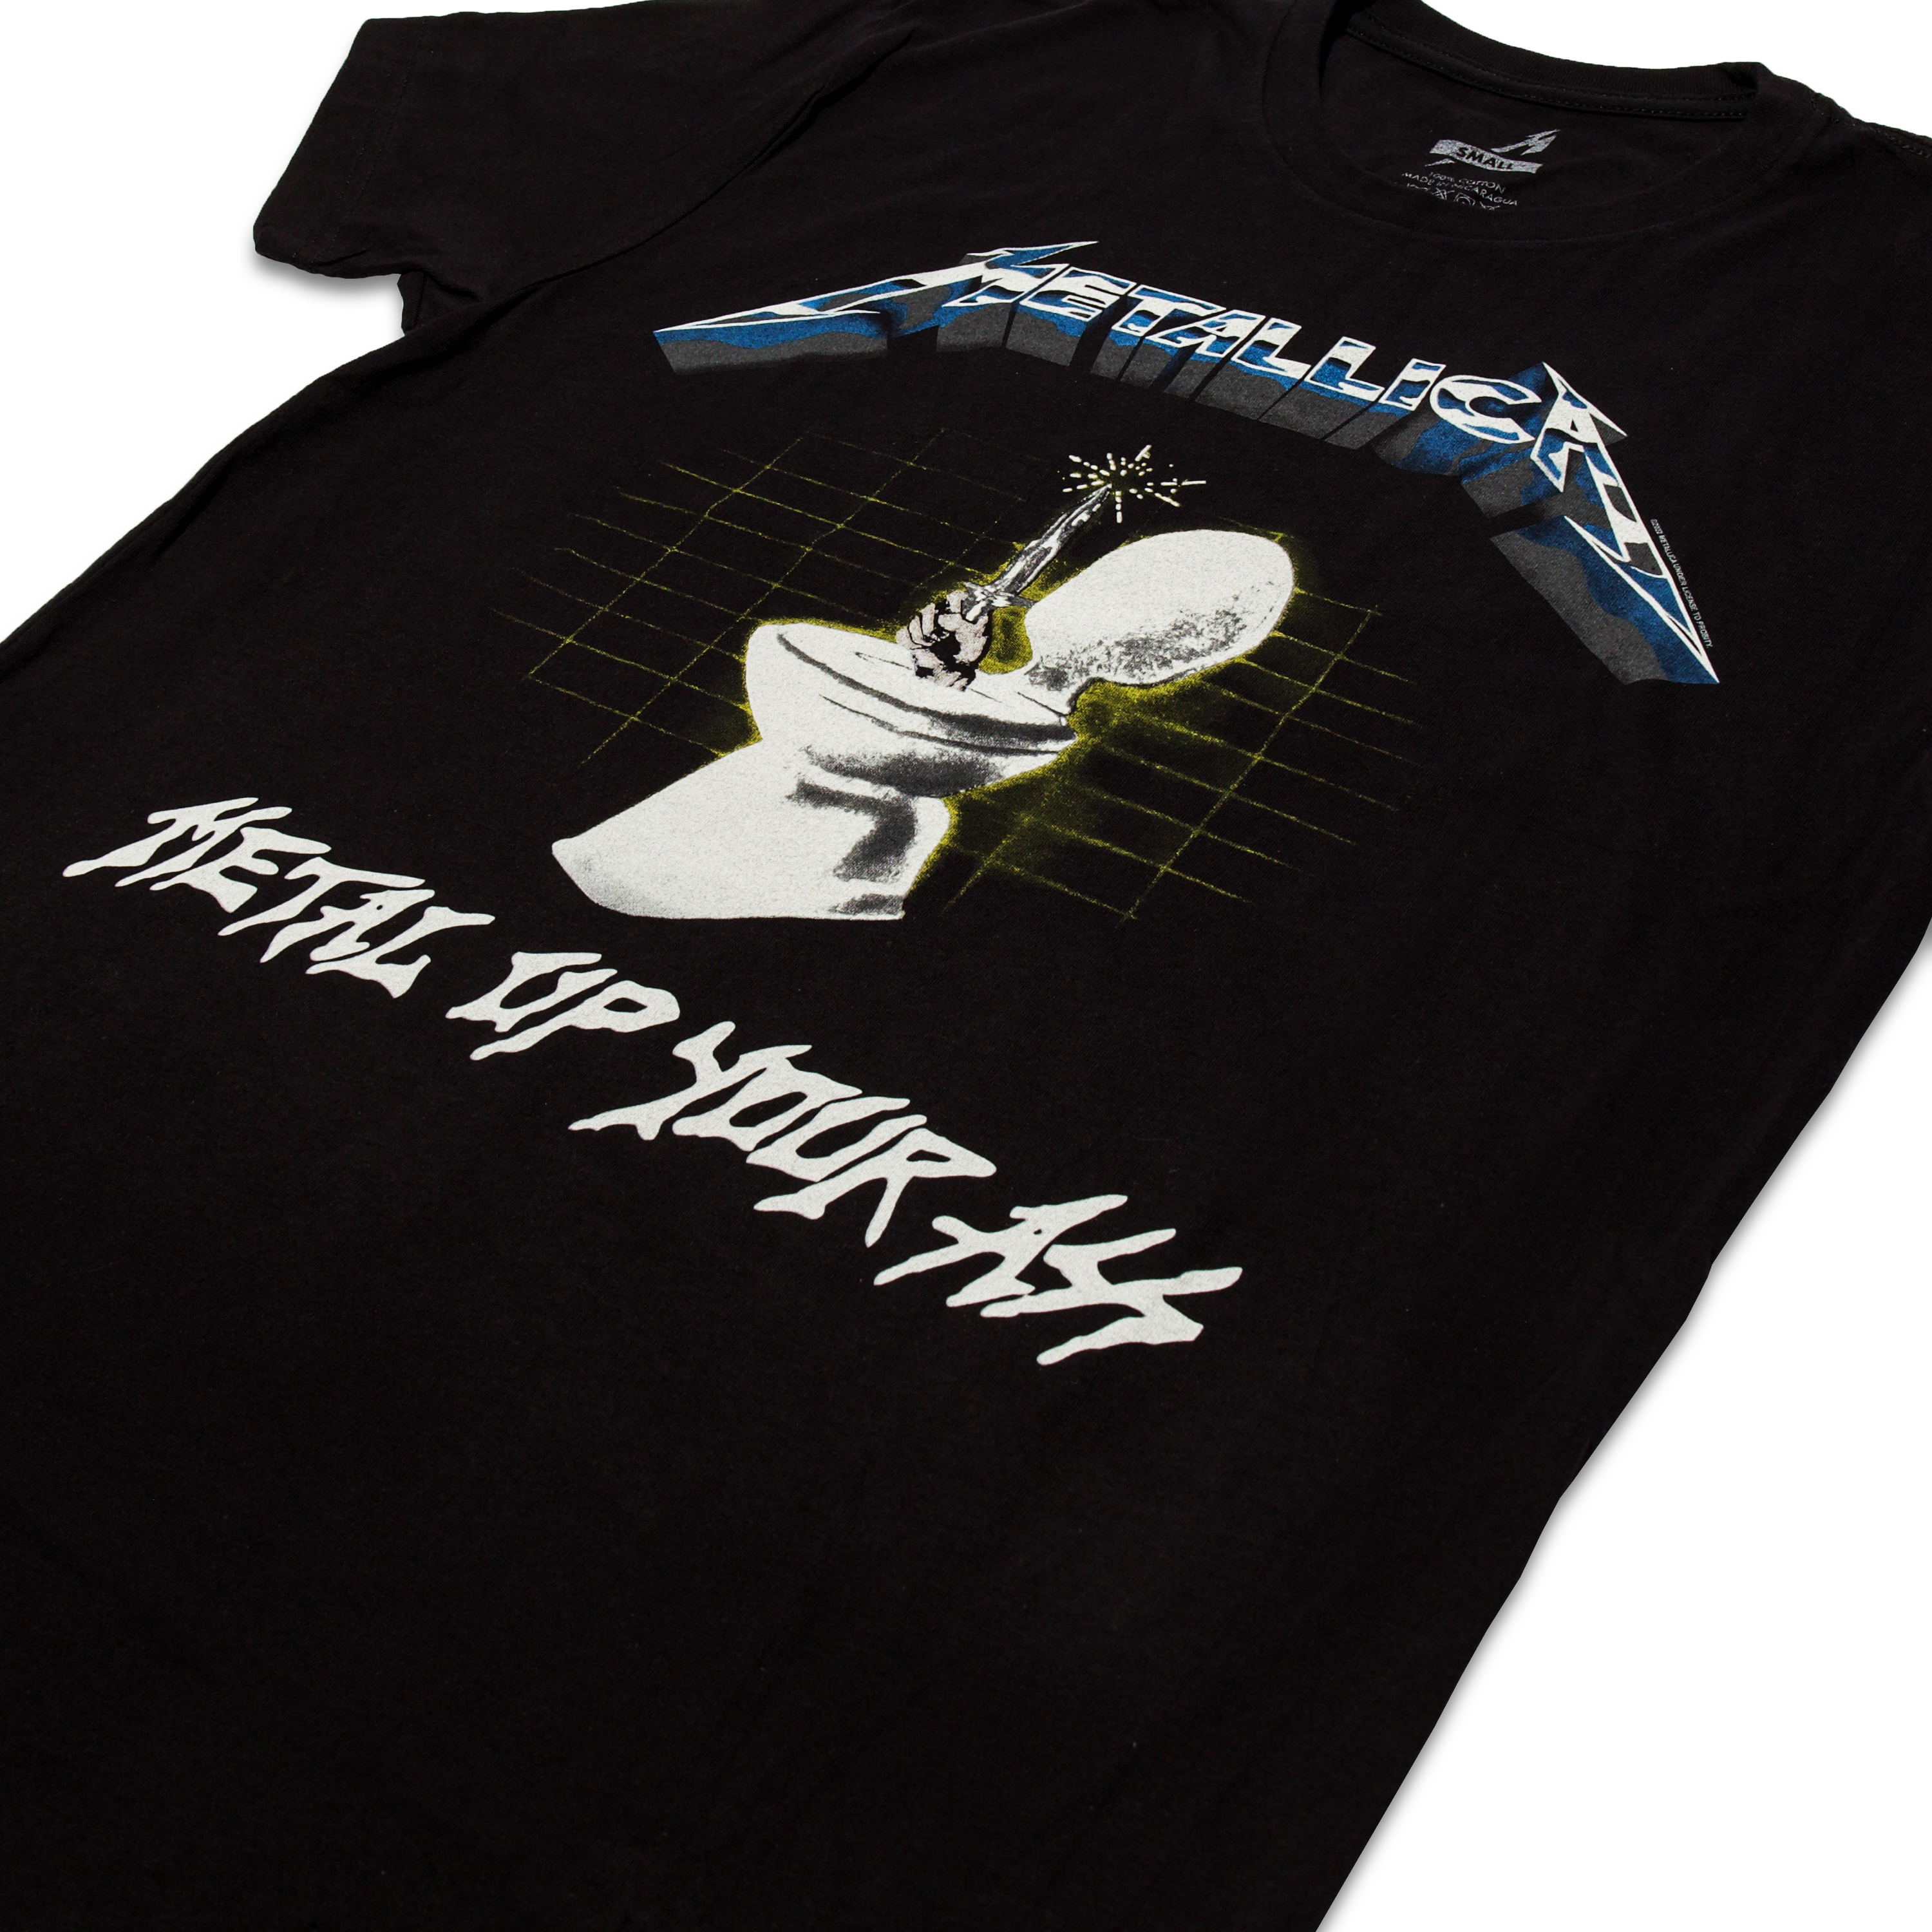 Metal Up Your Ass T-Shirt - 4XL